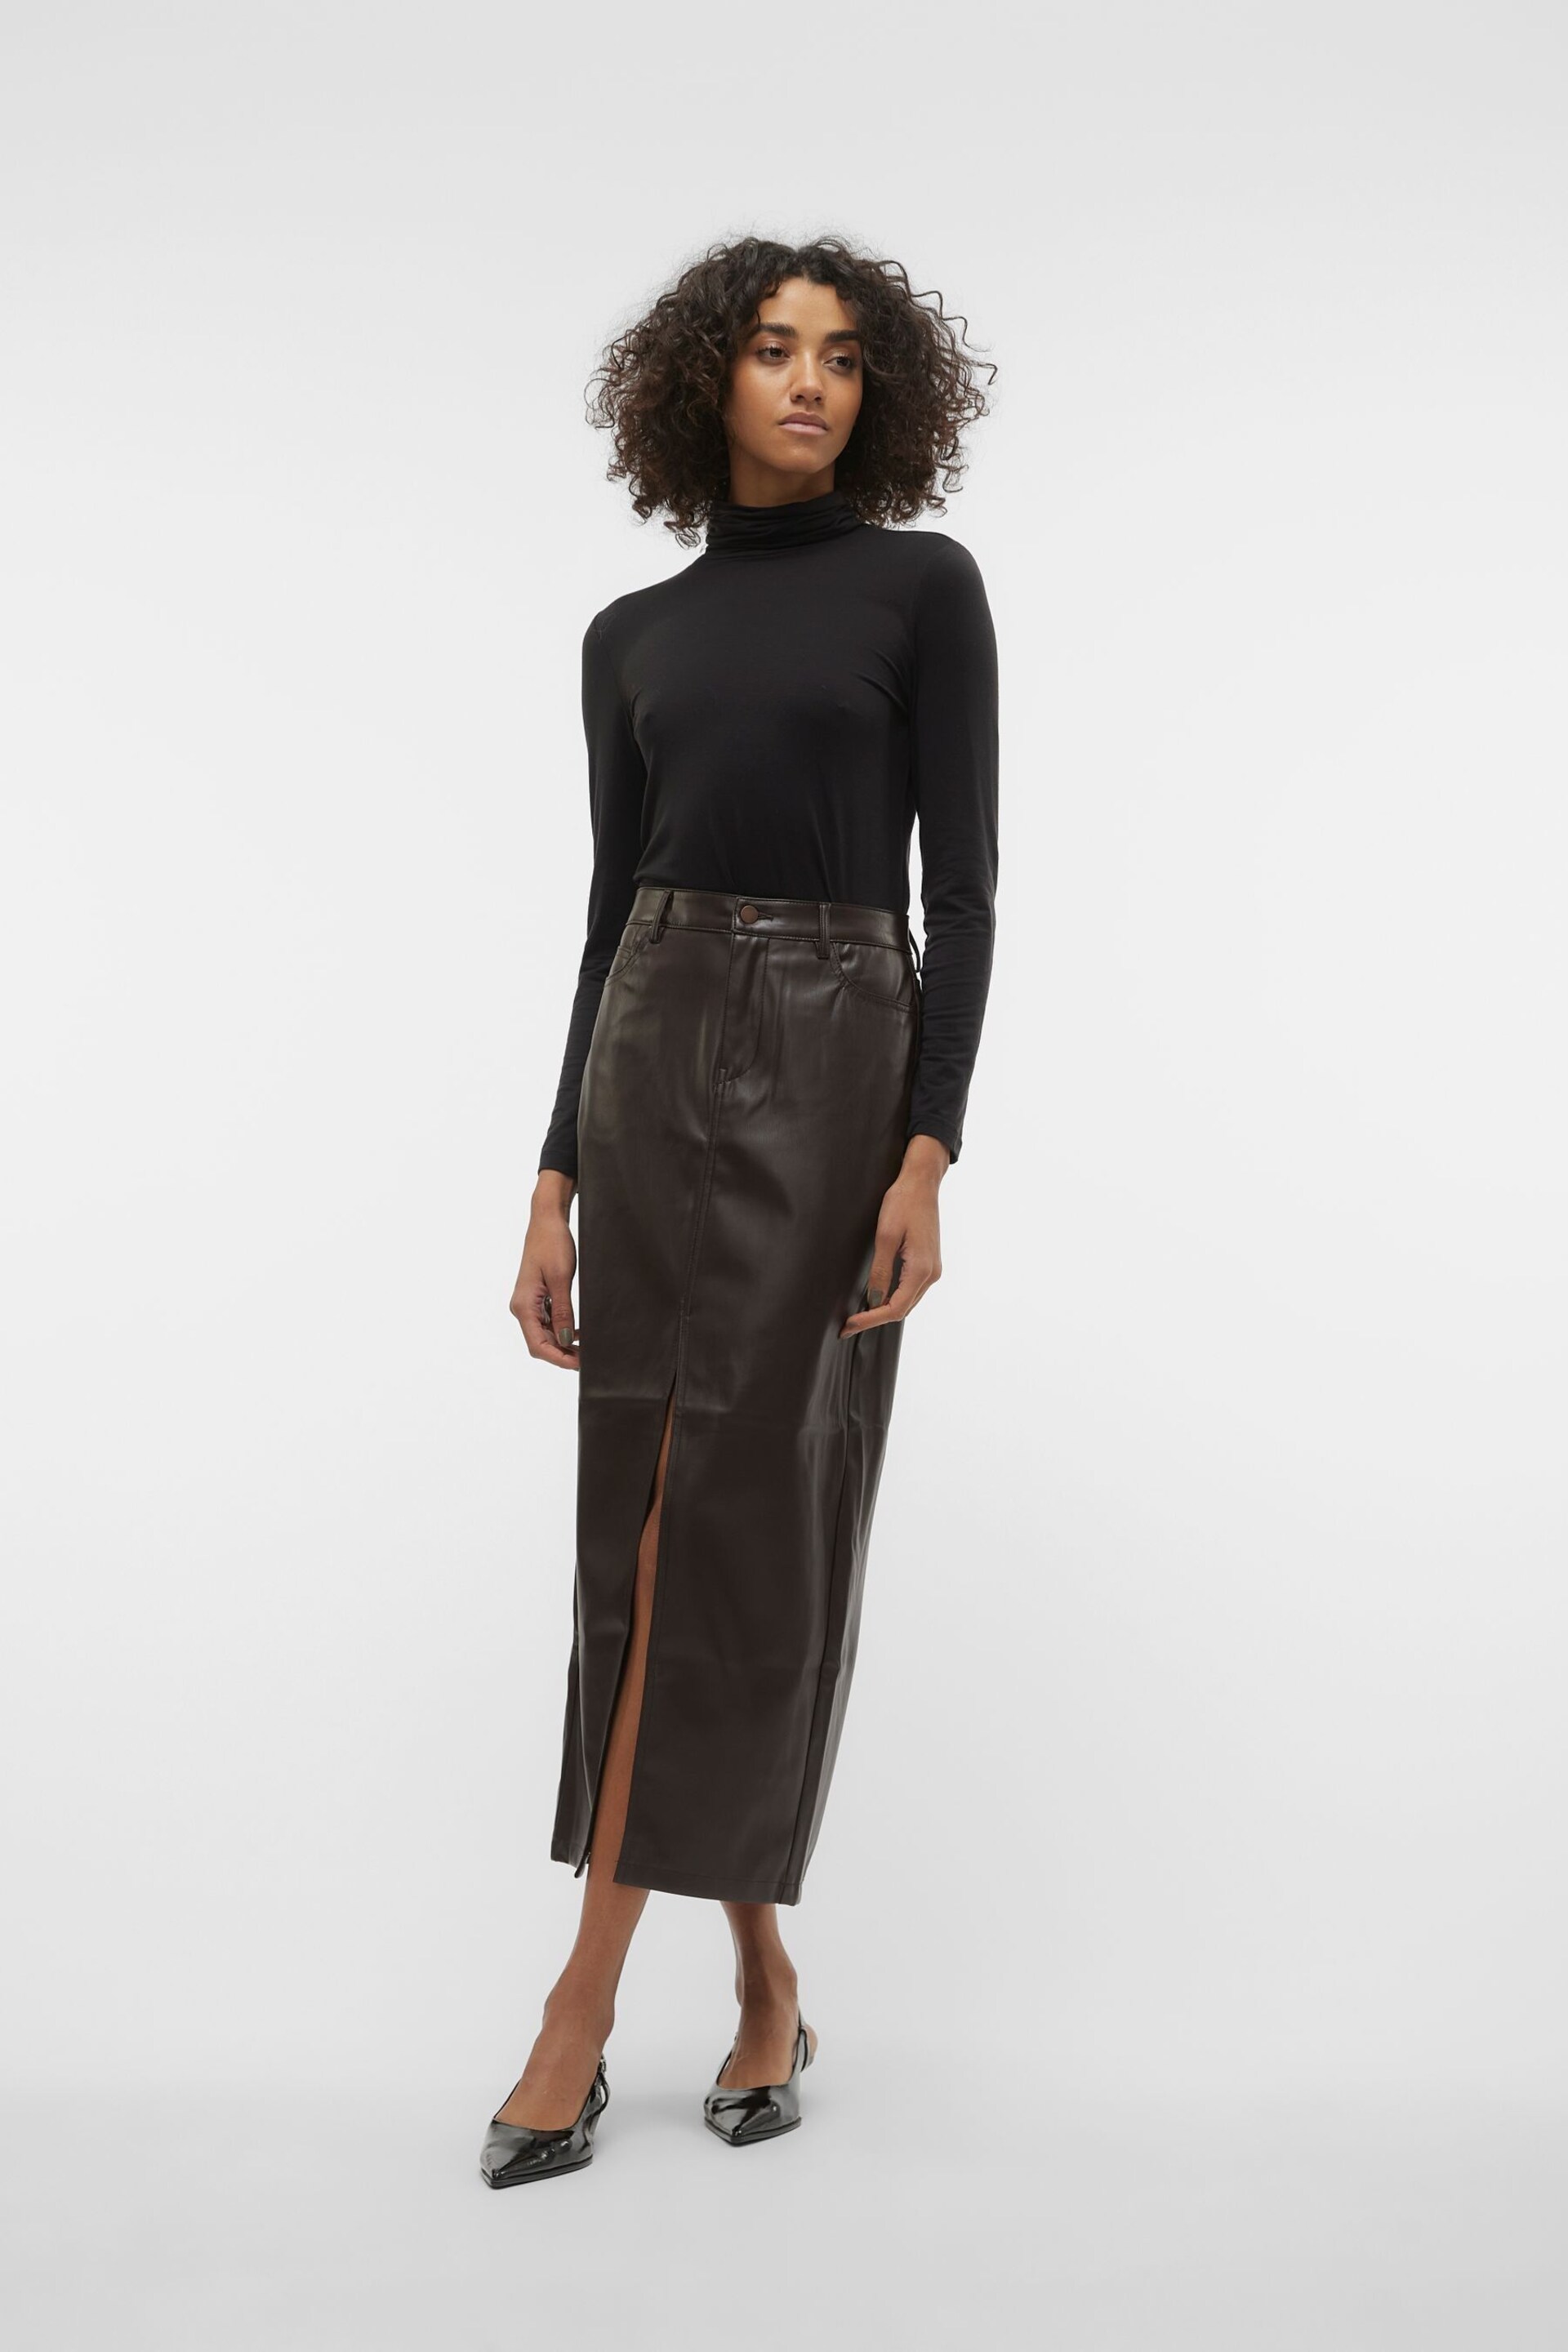 VERO MODA Brown Faux Leather Midi Skirt - Image 4 of 7